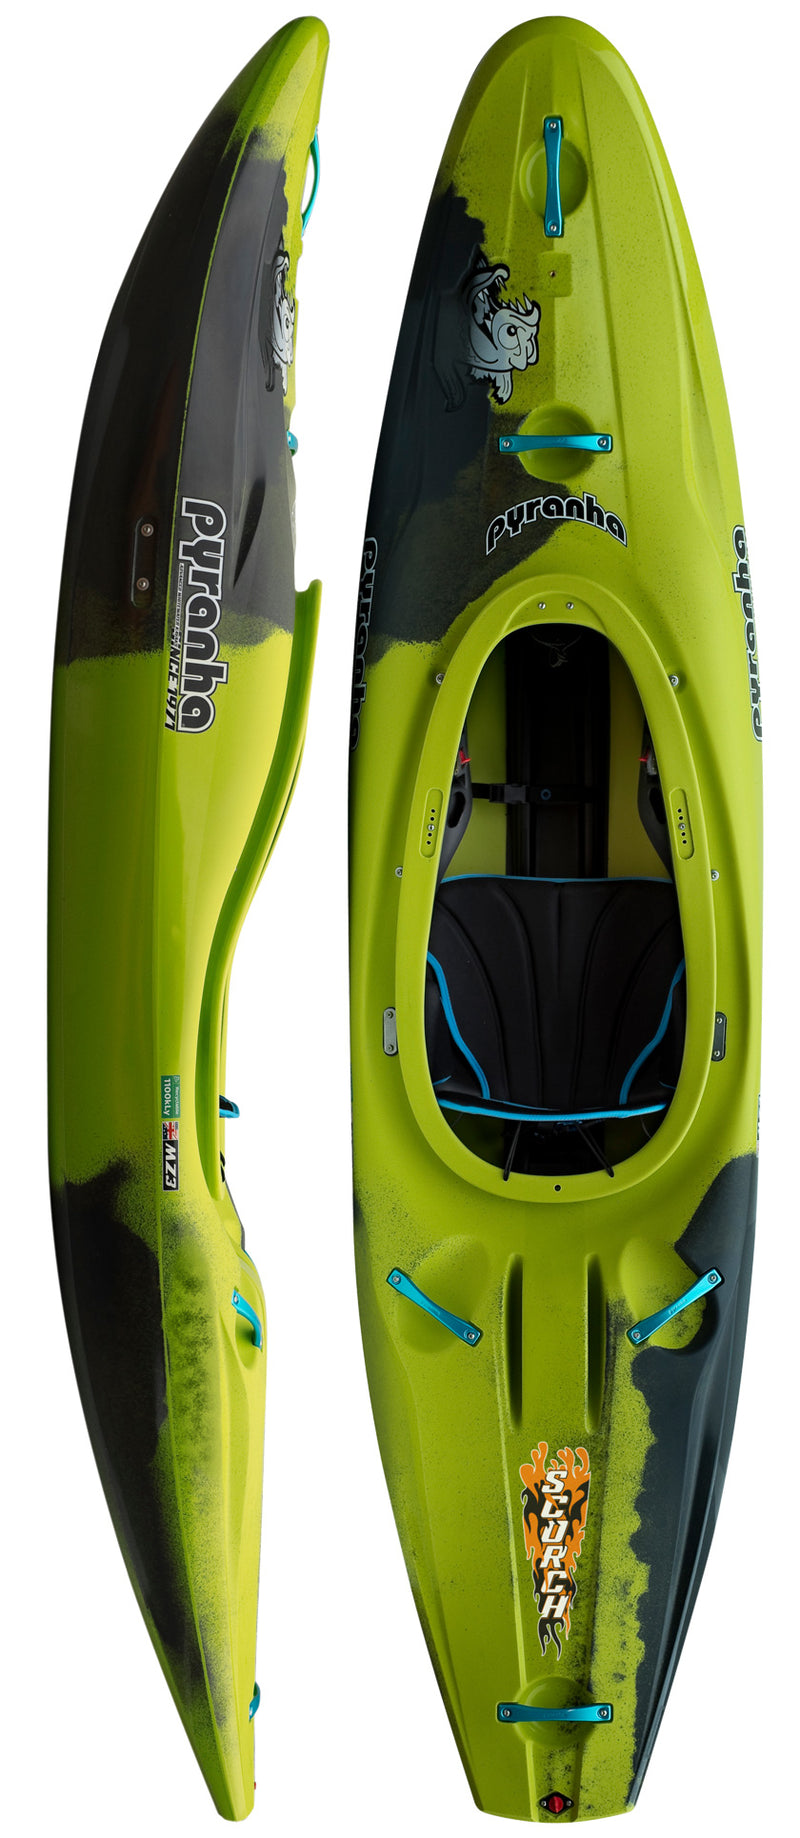 Pyranha Scorch Whitewater kayaks